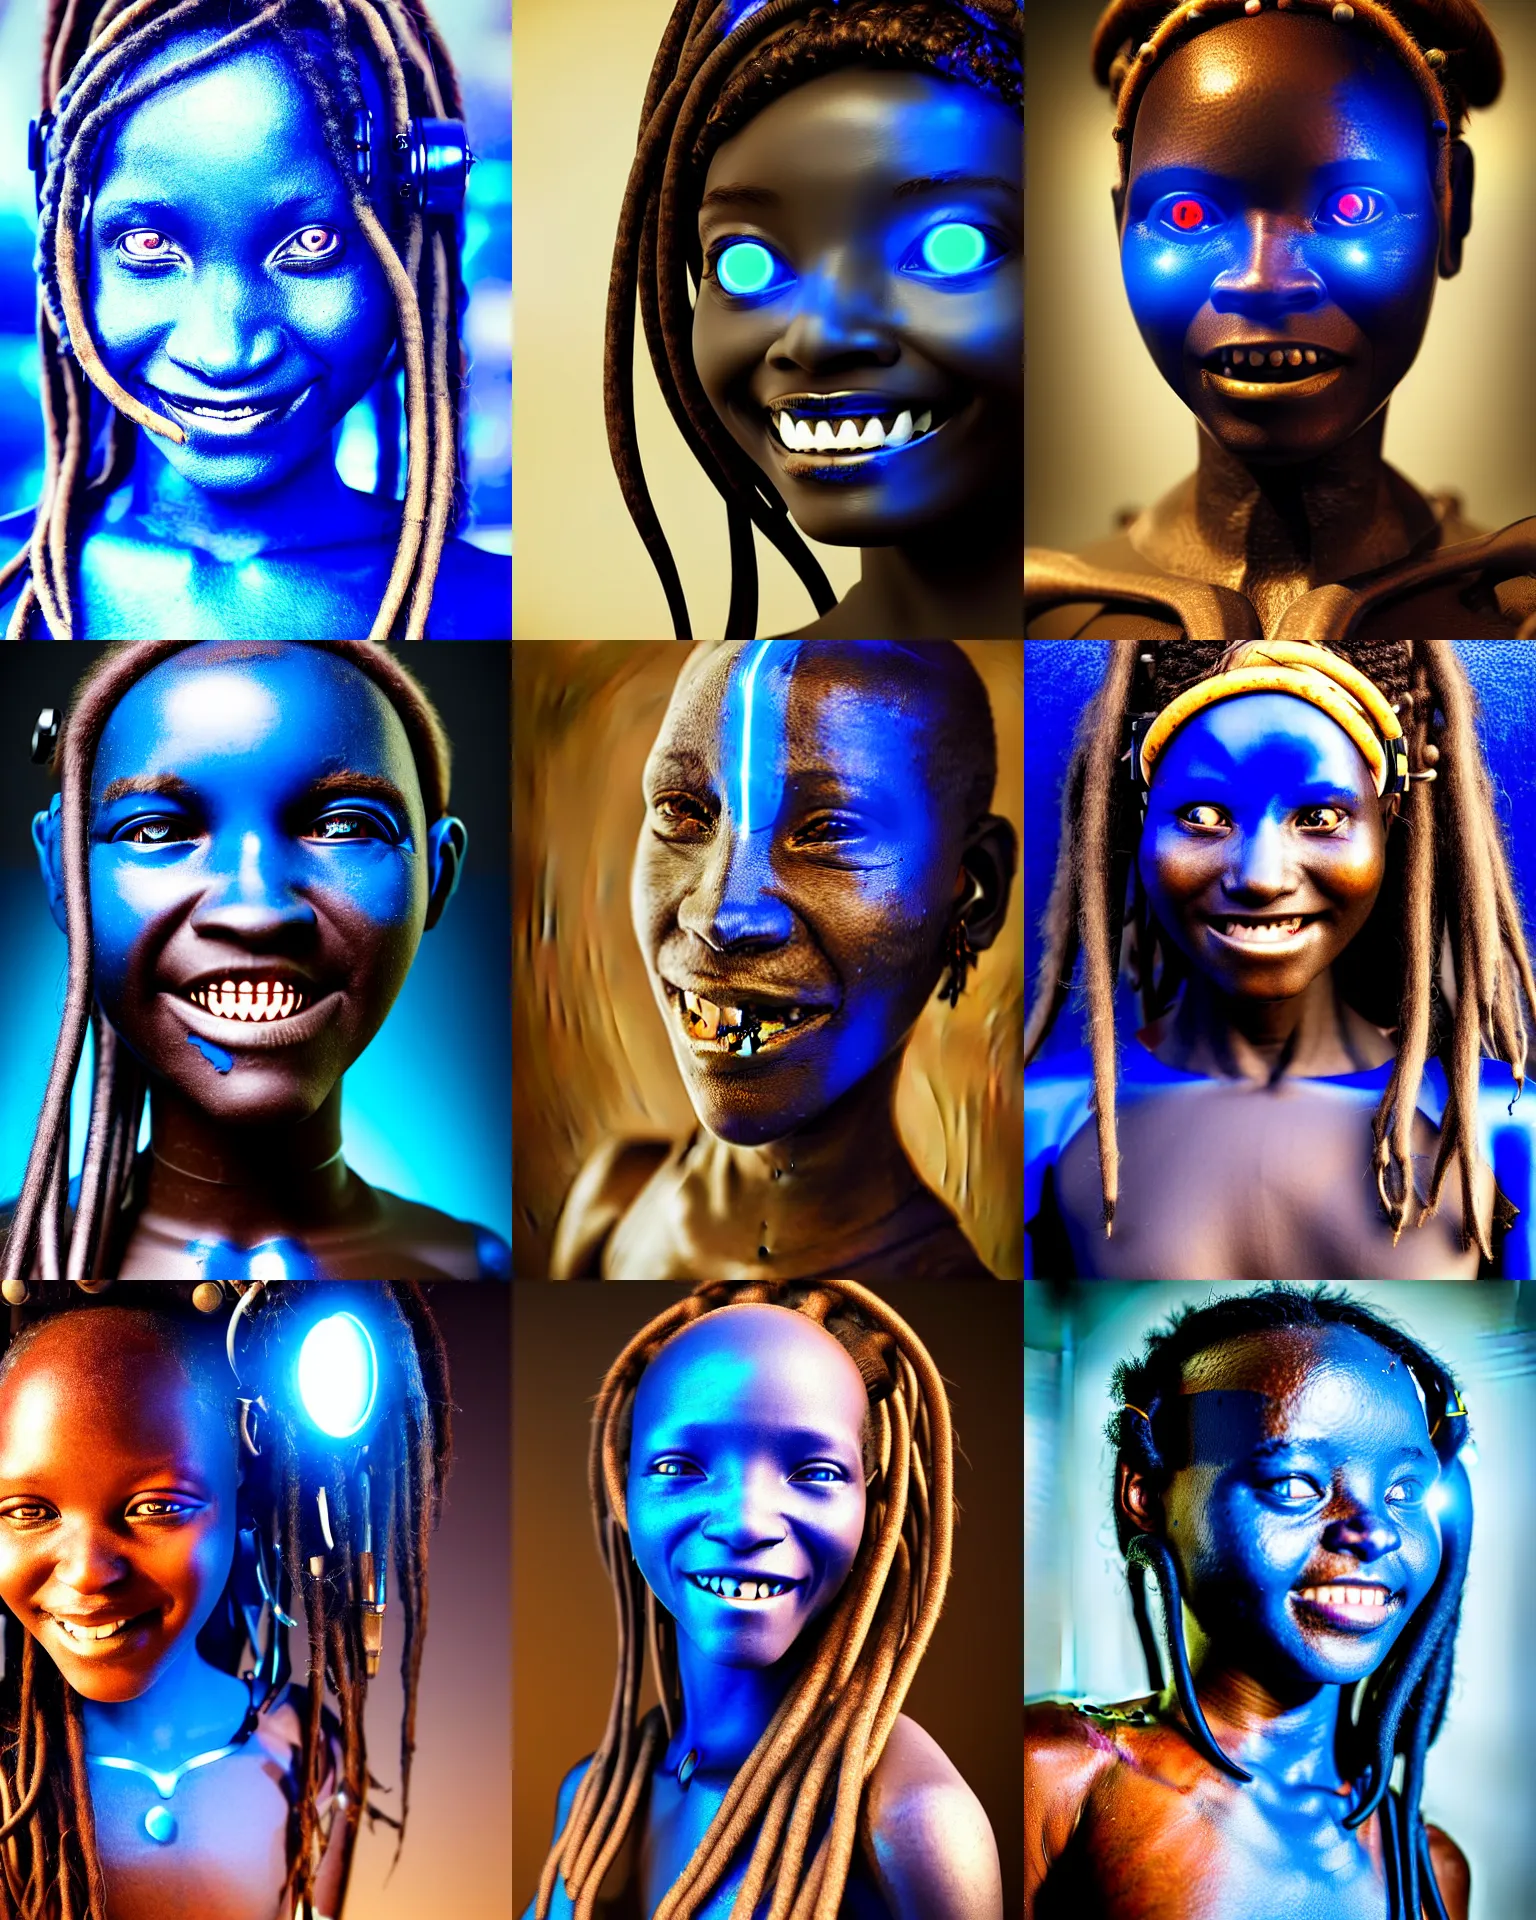 Prompt: futuristic himba young woman smiling, glowing mechanical blue eye, robotic limb, blue dreadlocks, realistic sci - fi, dramatic lighting, intricate, soft focus